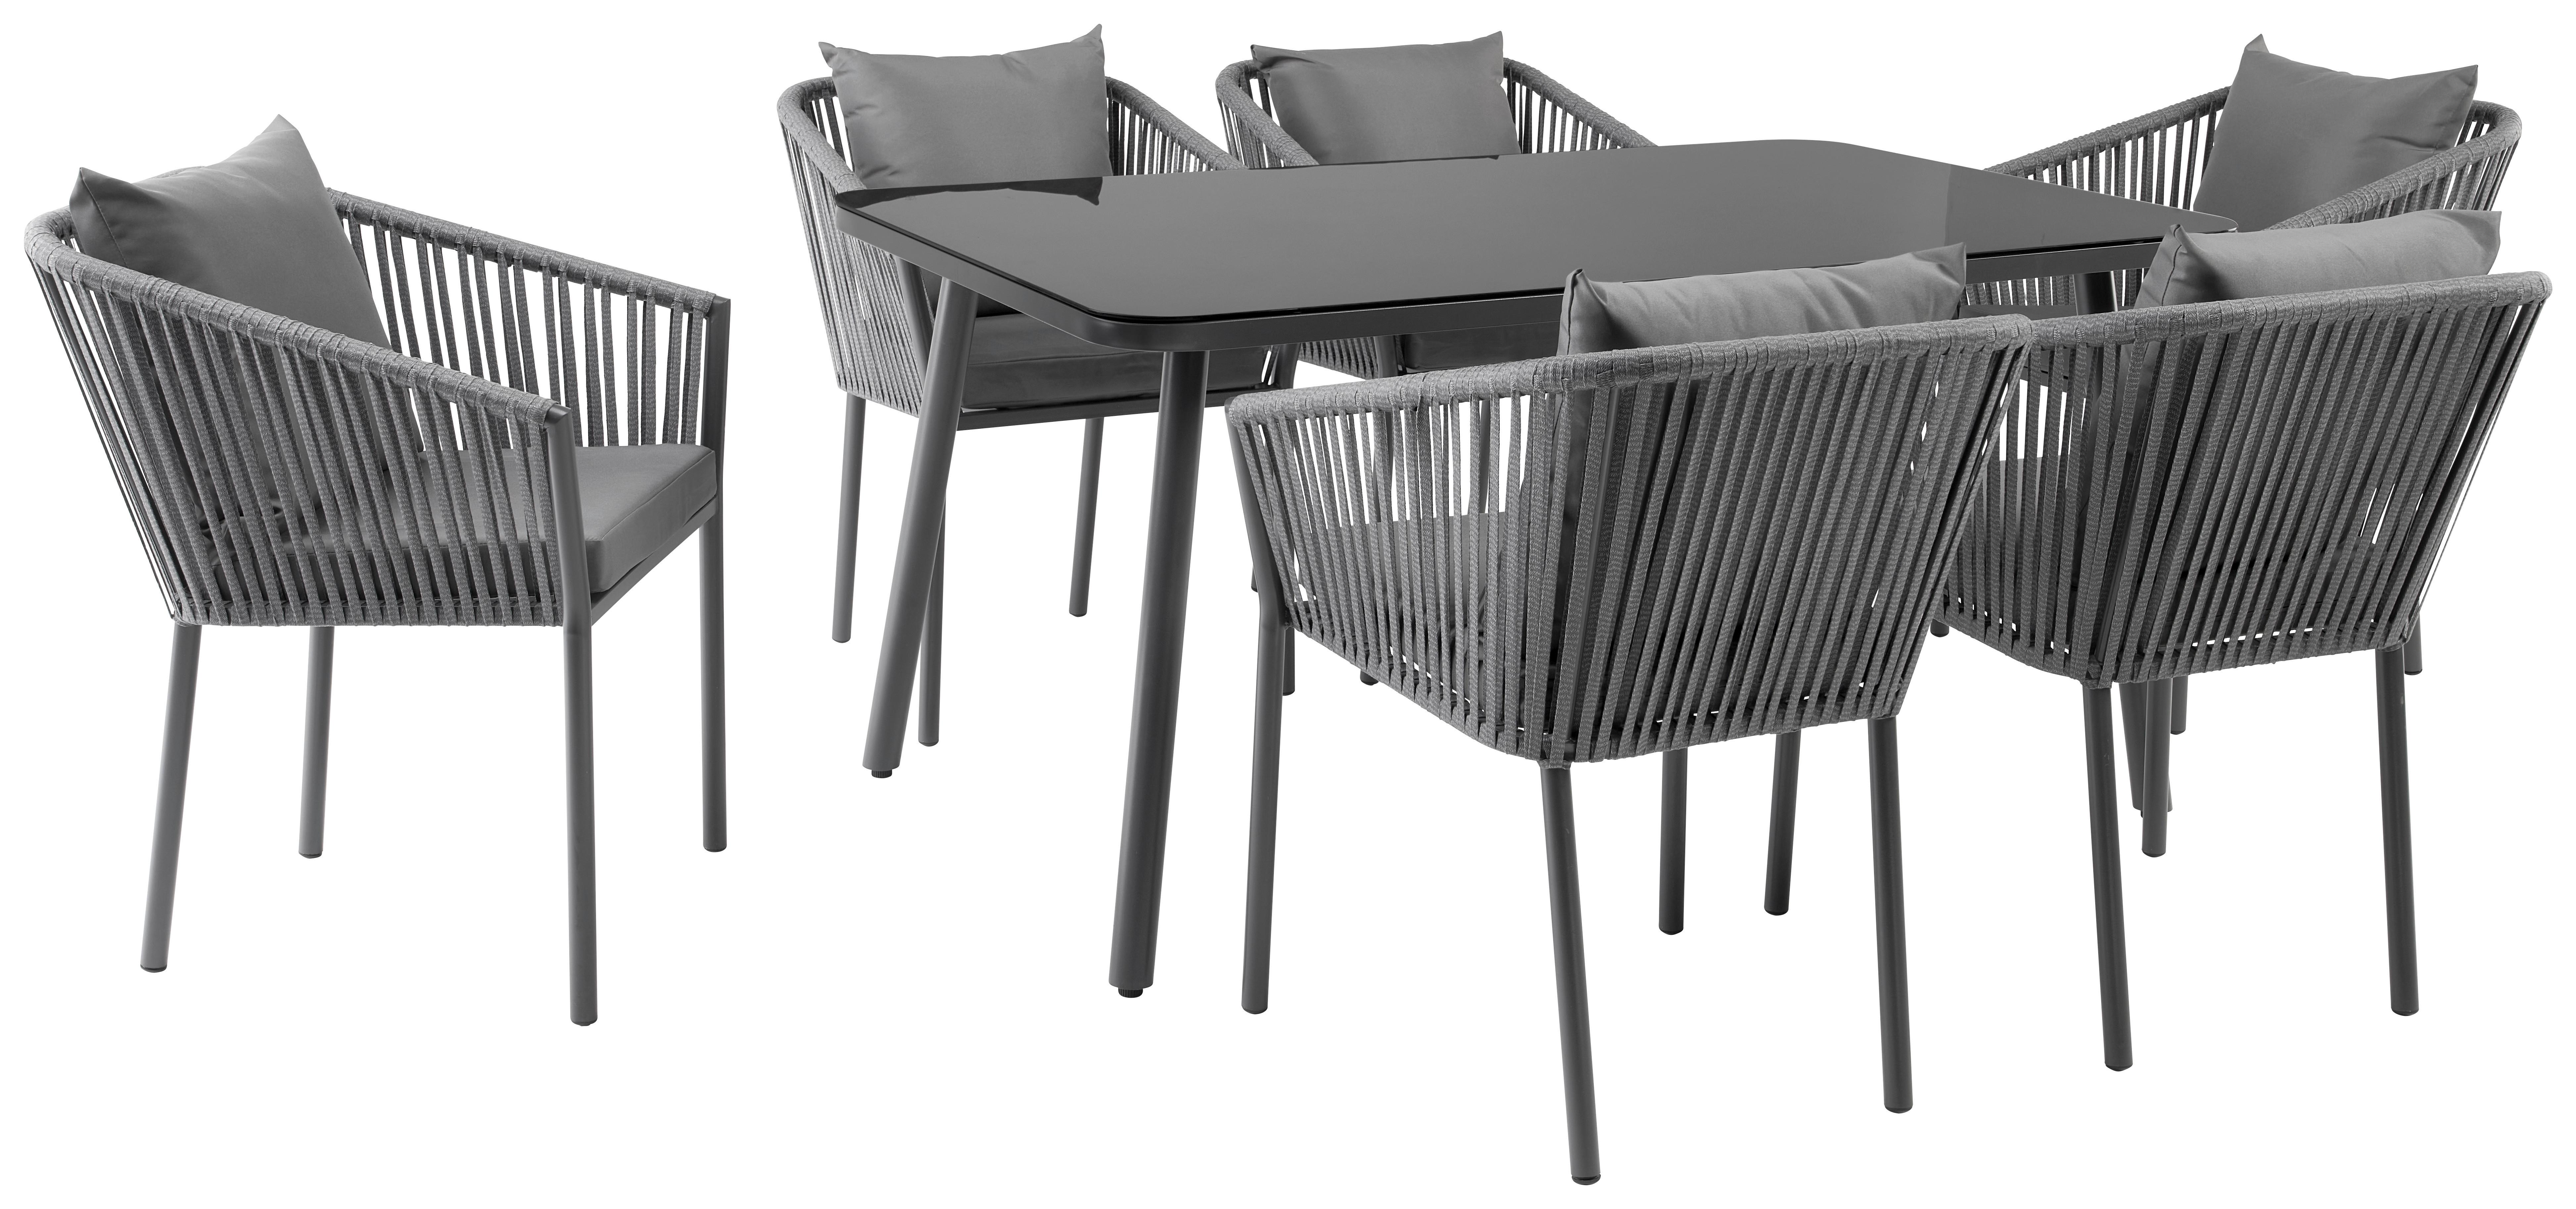 Dining-Loungeset Toscan, 7-teilig - Dunkelgrau/Schwarz, Modern, Glas/Textil (150/62/74/81/90/61cm) - Modern Living